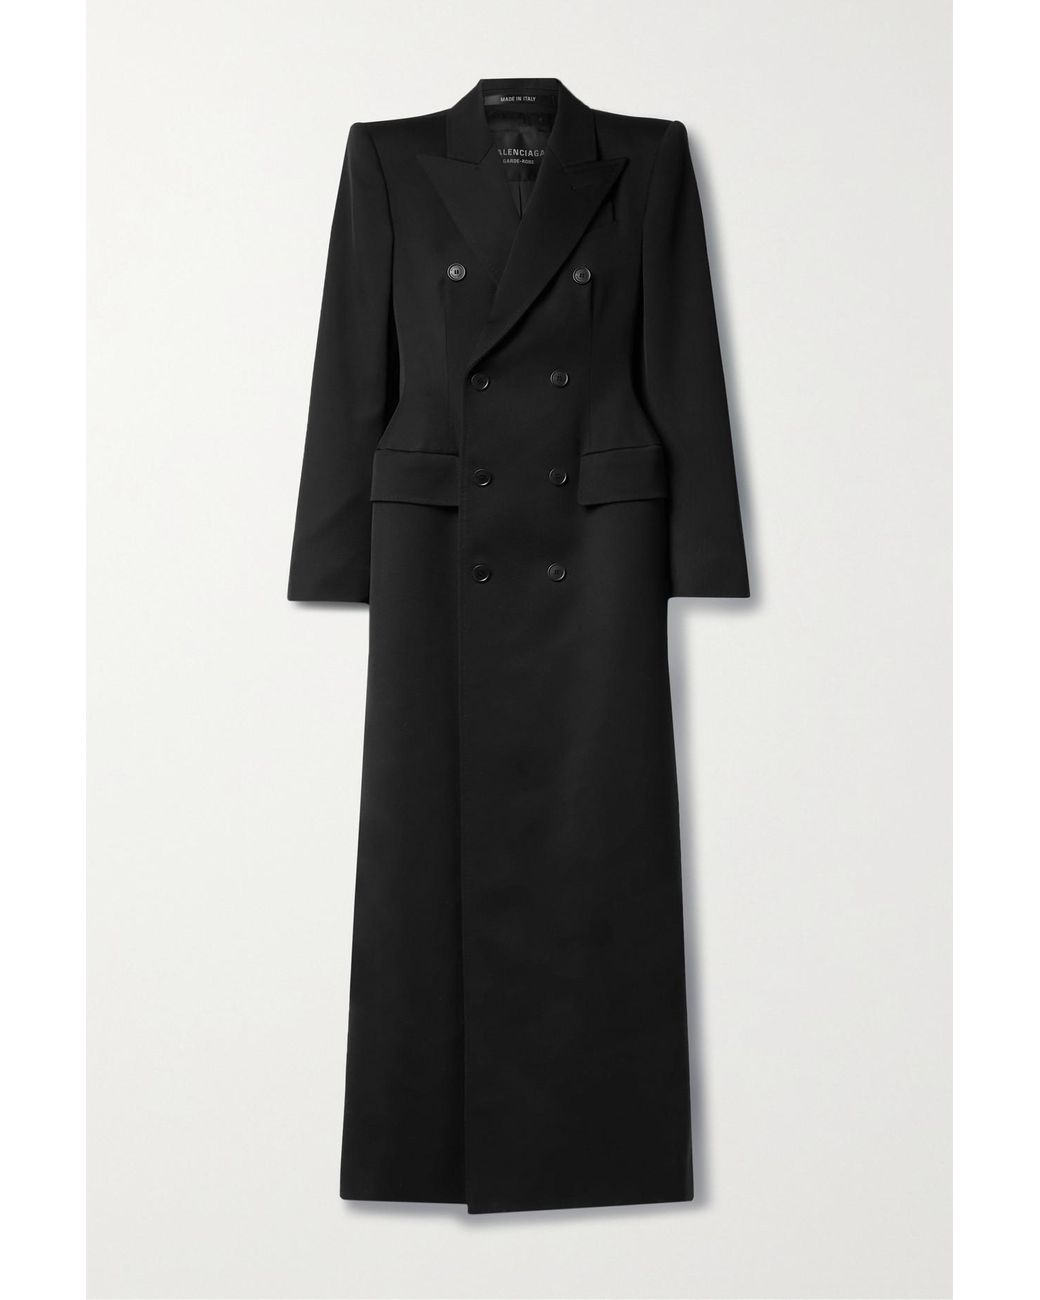 BALENCIAGA Paris women039s burgundy coat size 38 Made in France luxury  fashion  eBay